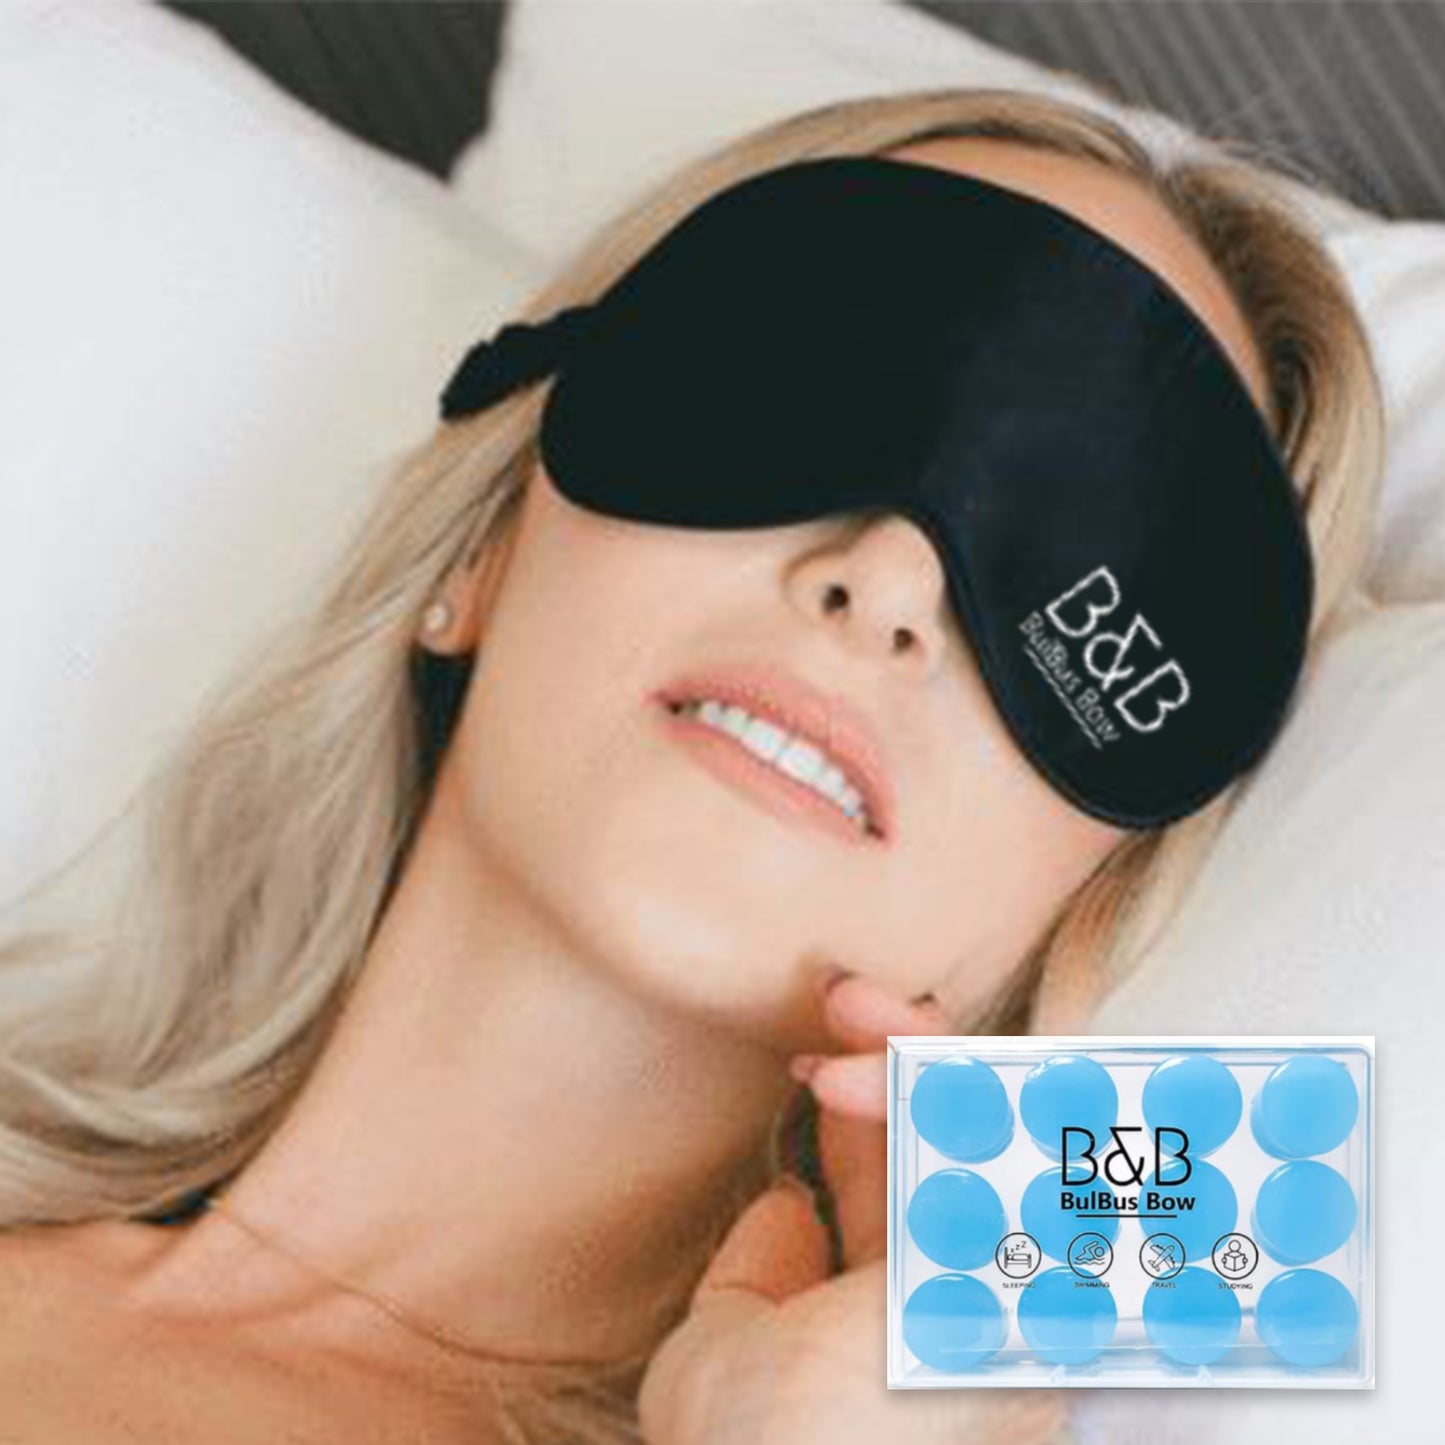 Silk Eye Mask, Improve sleep quality and blackout light